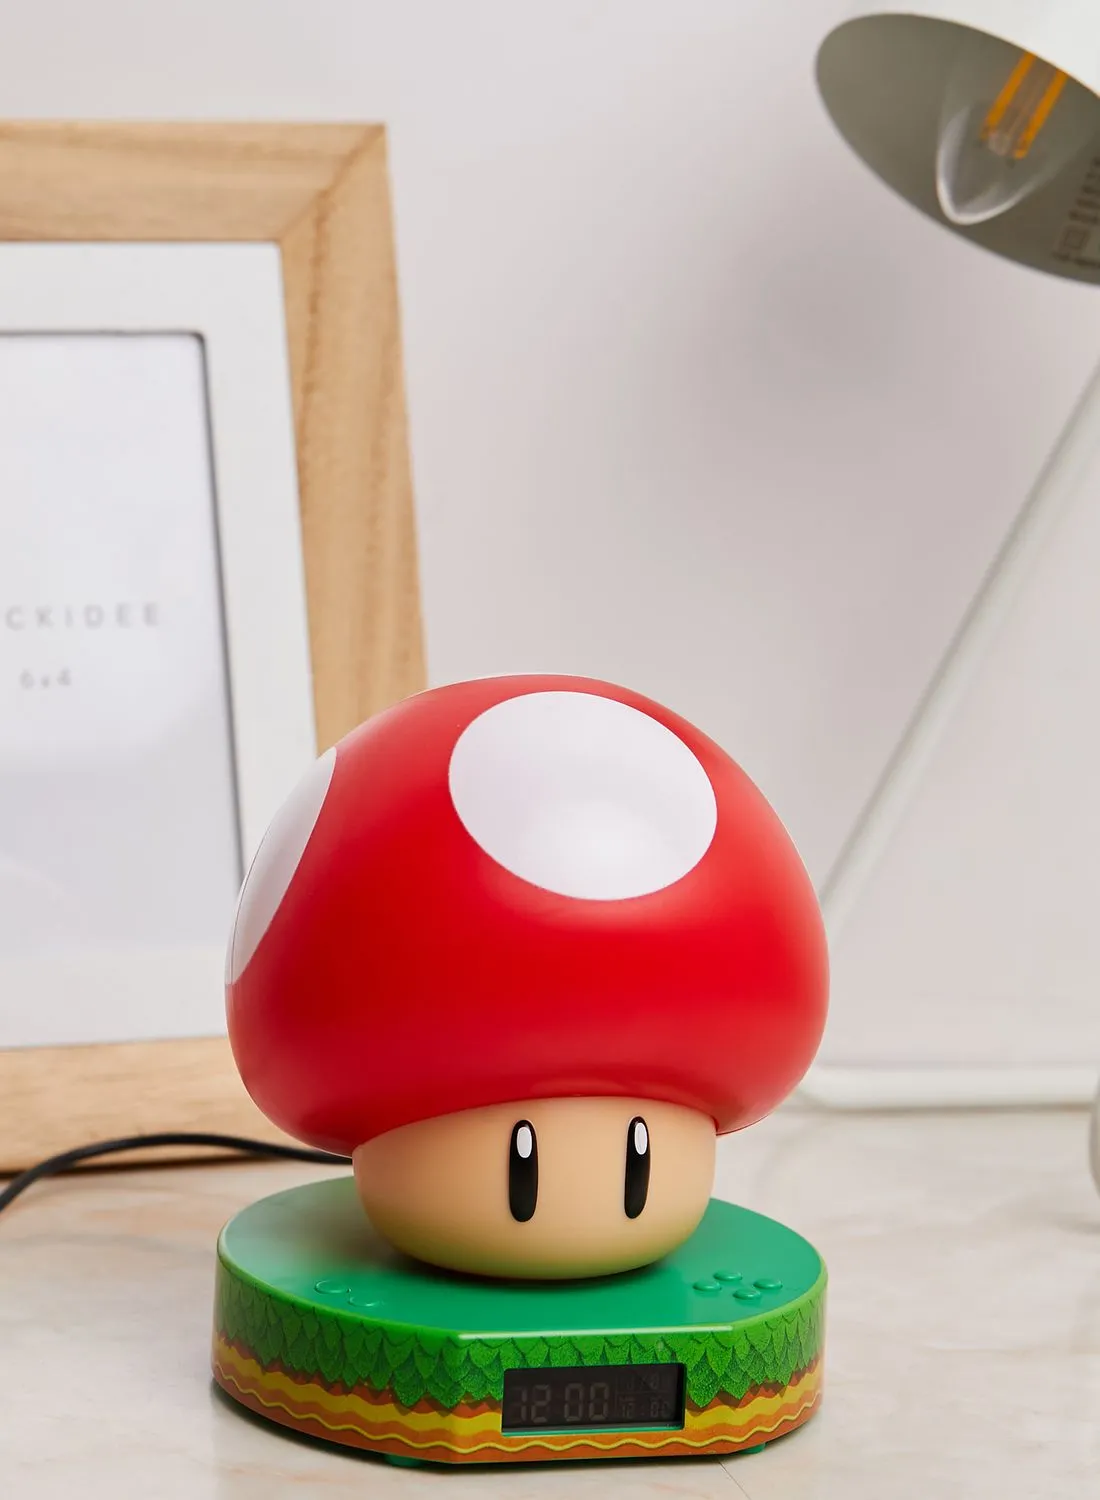 Paladone Super Mario Mushroom Digital Alarm Clock